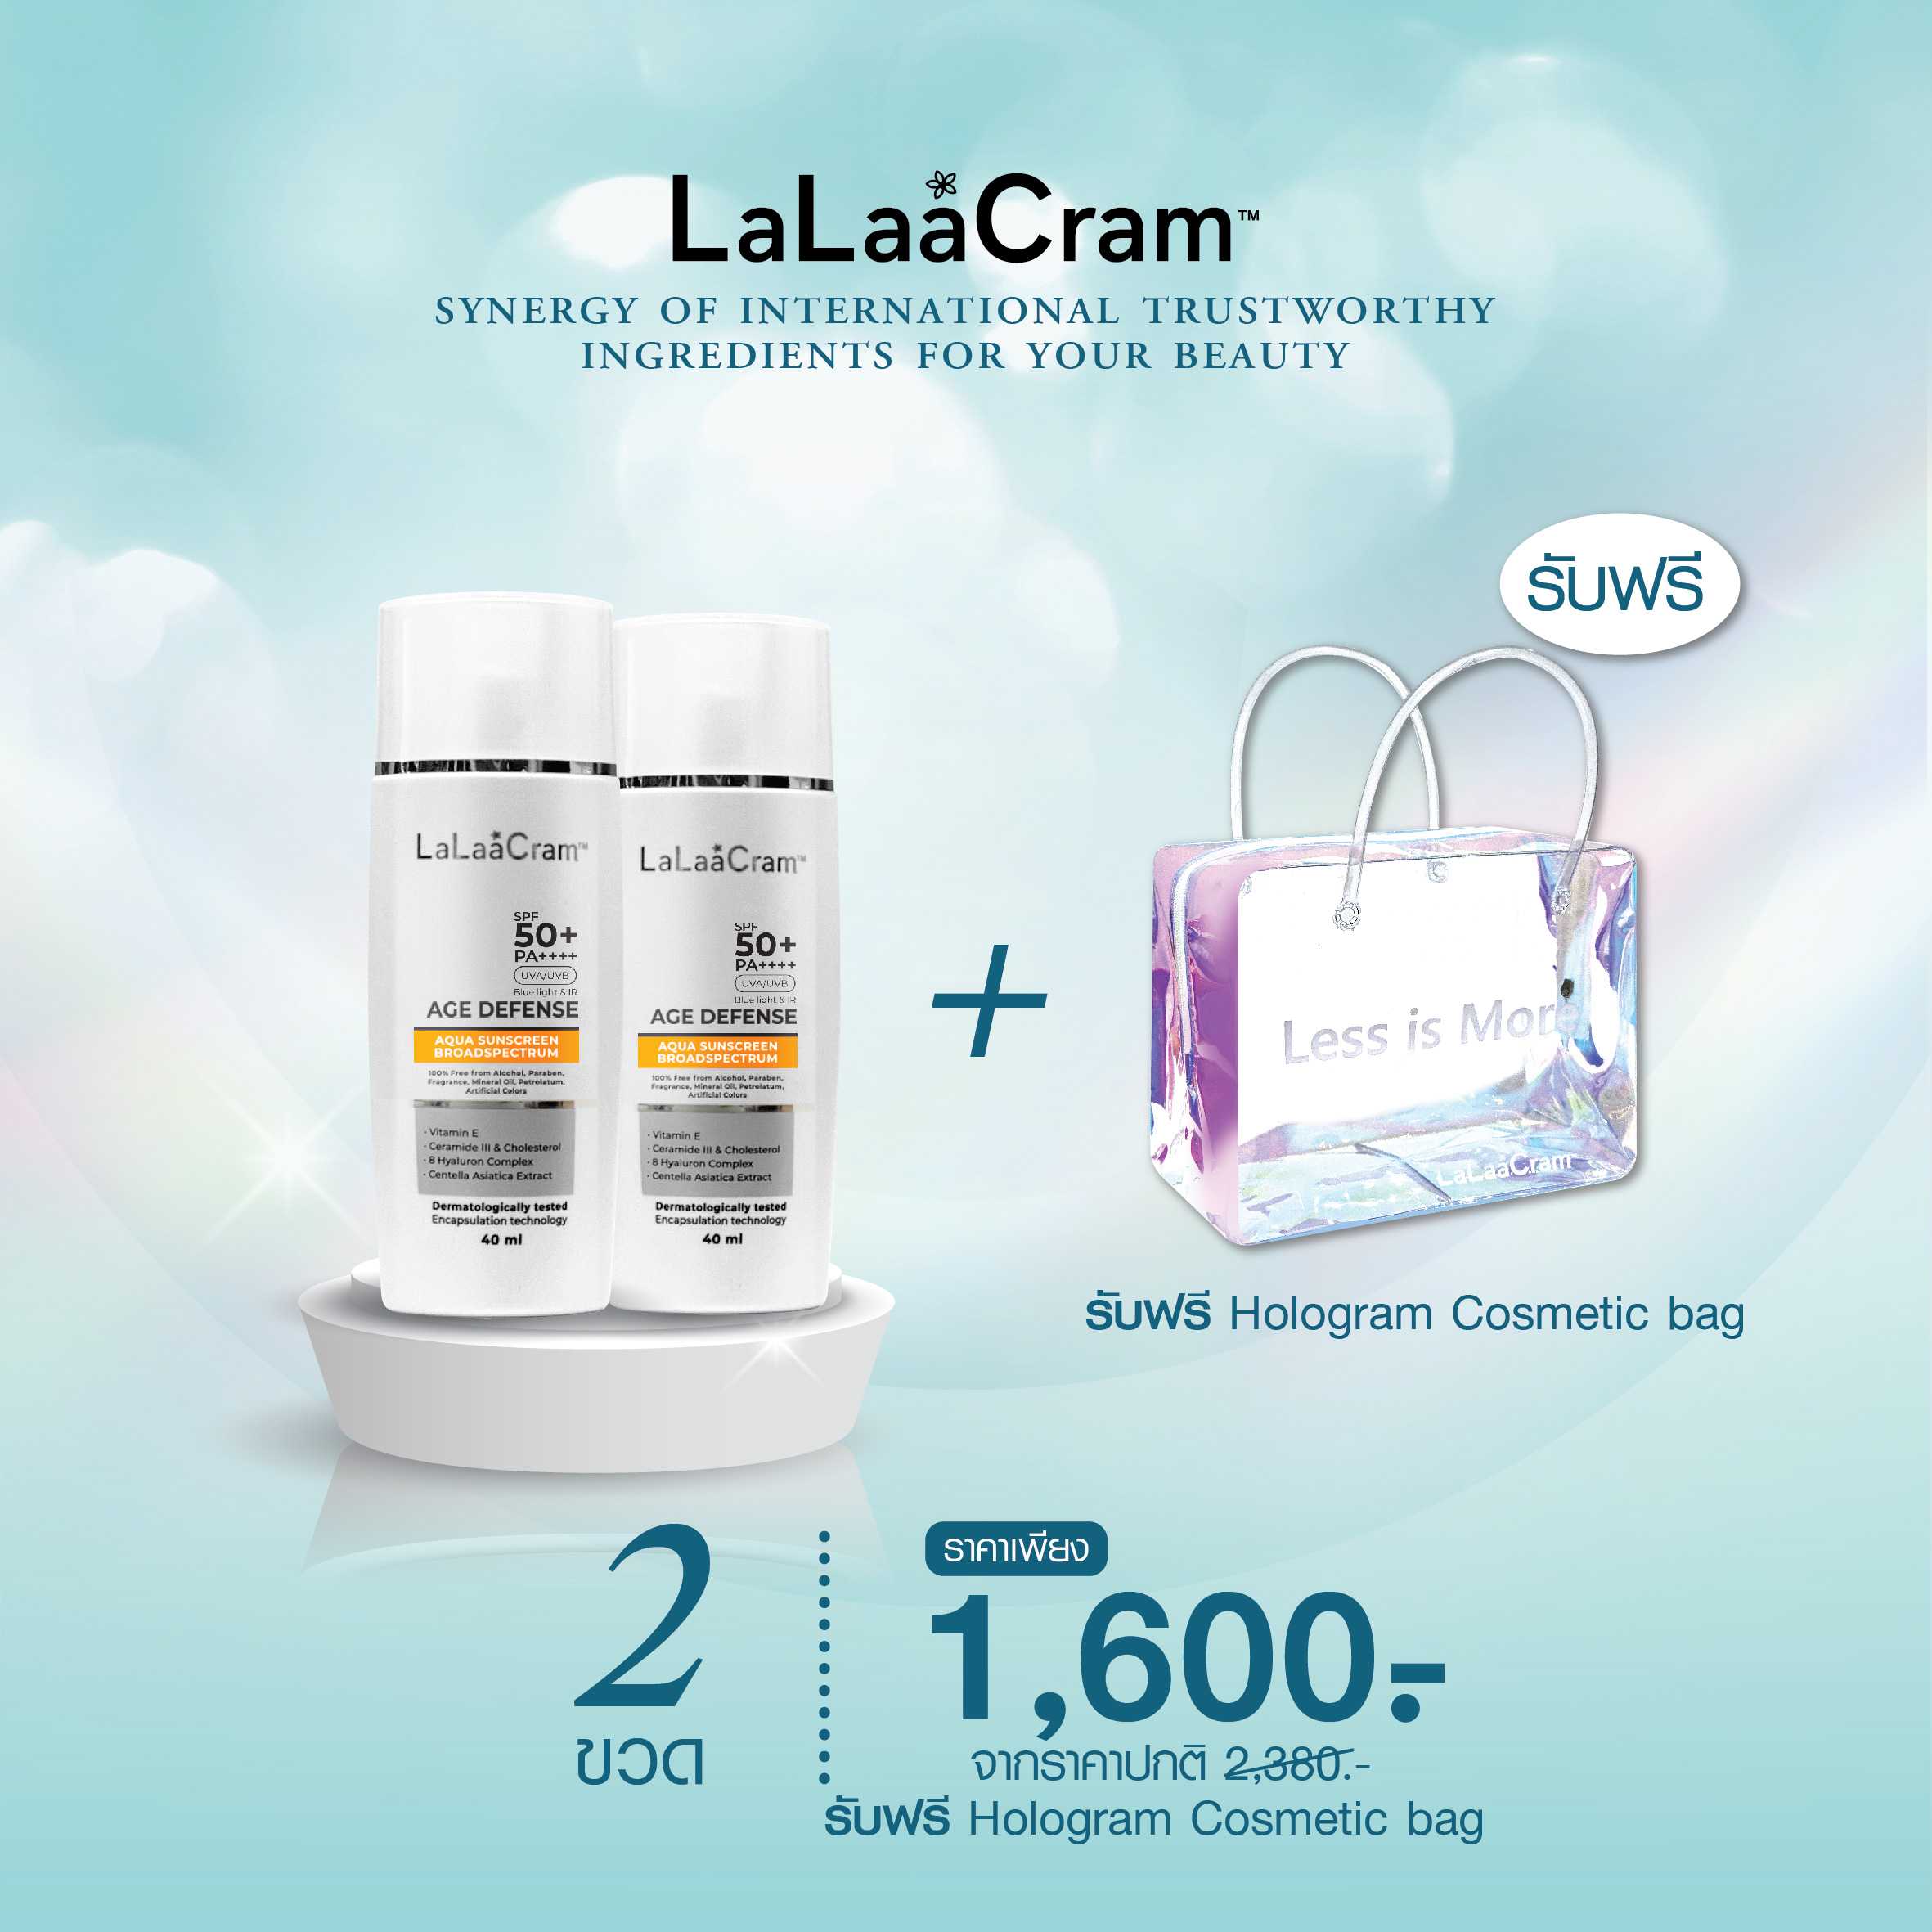 LaLaaCram Anti-Aging Sunscreen x 2